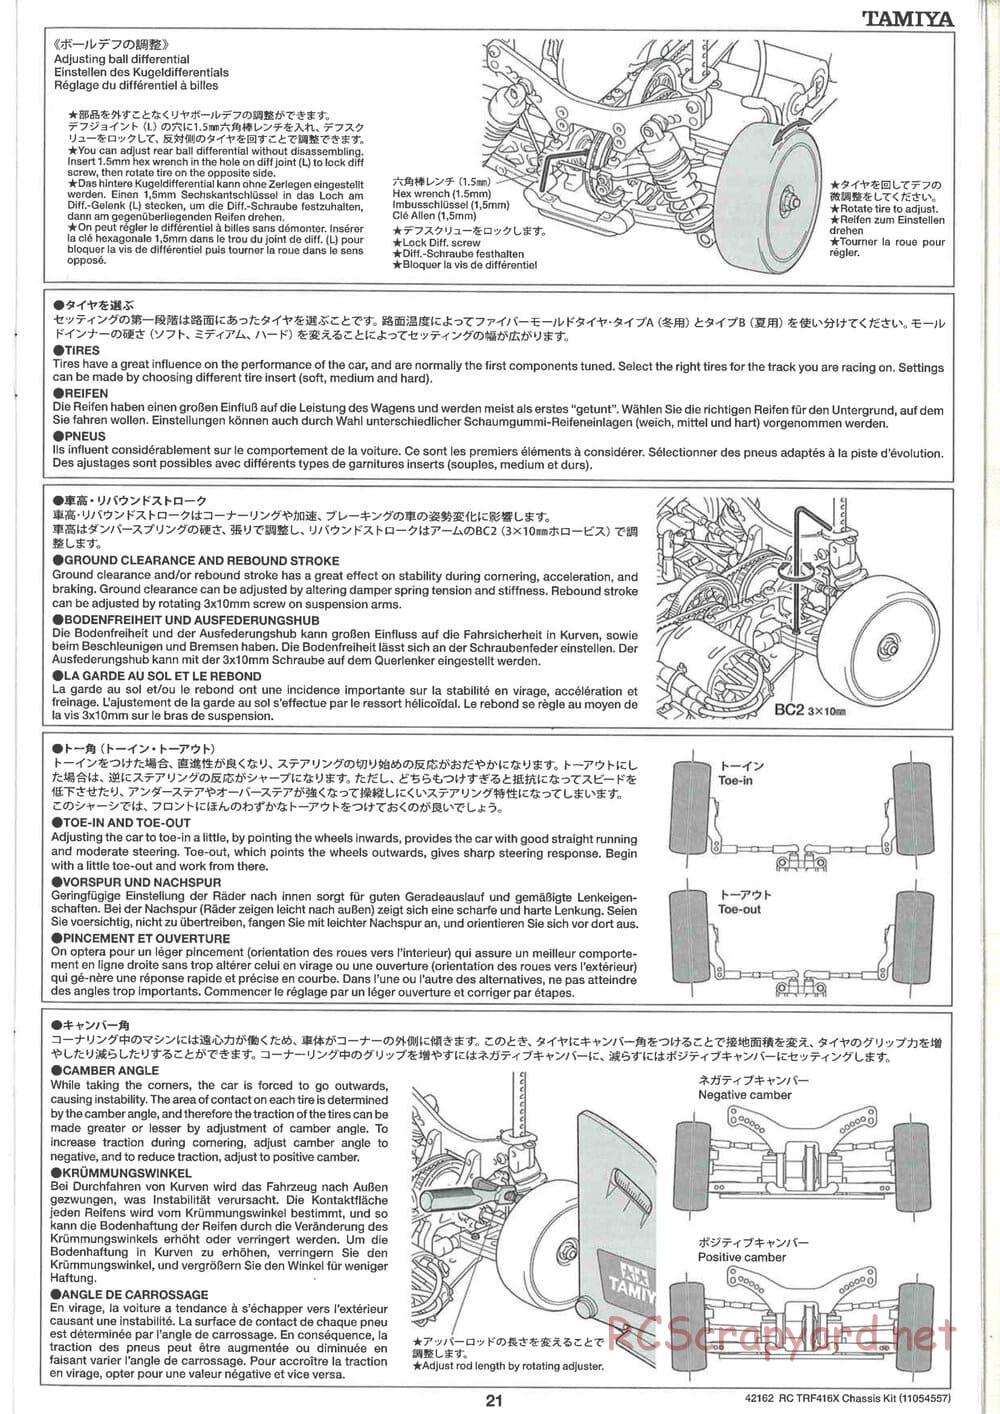 Tamiya - TRF416X Chassis - Manual - Page 21